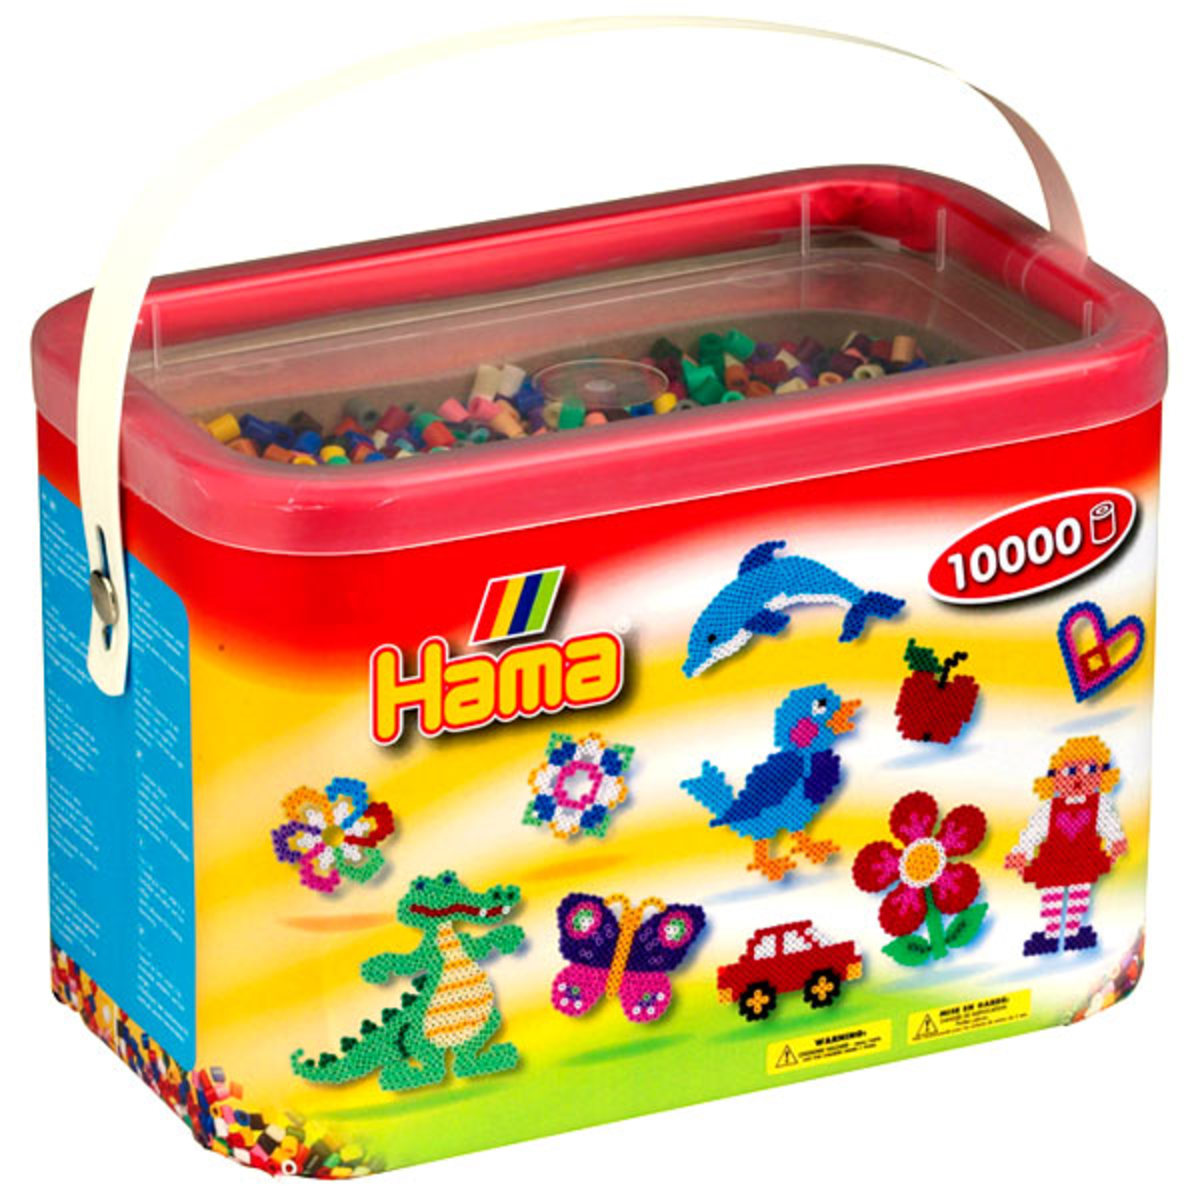  Hama 10000 Beads Tub